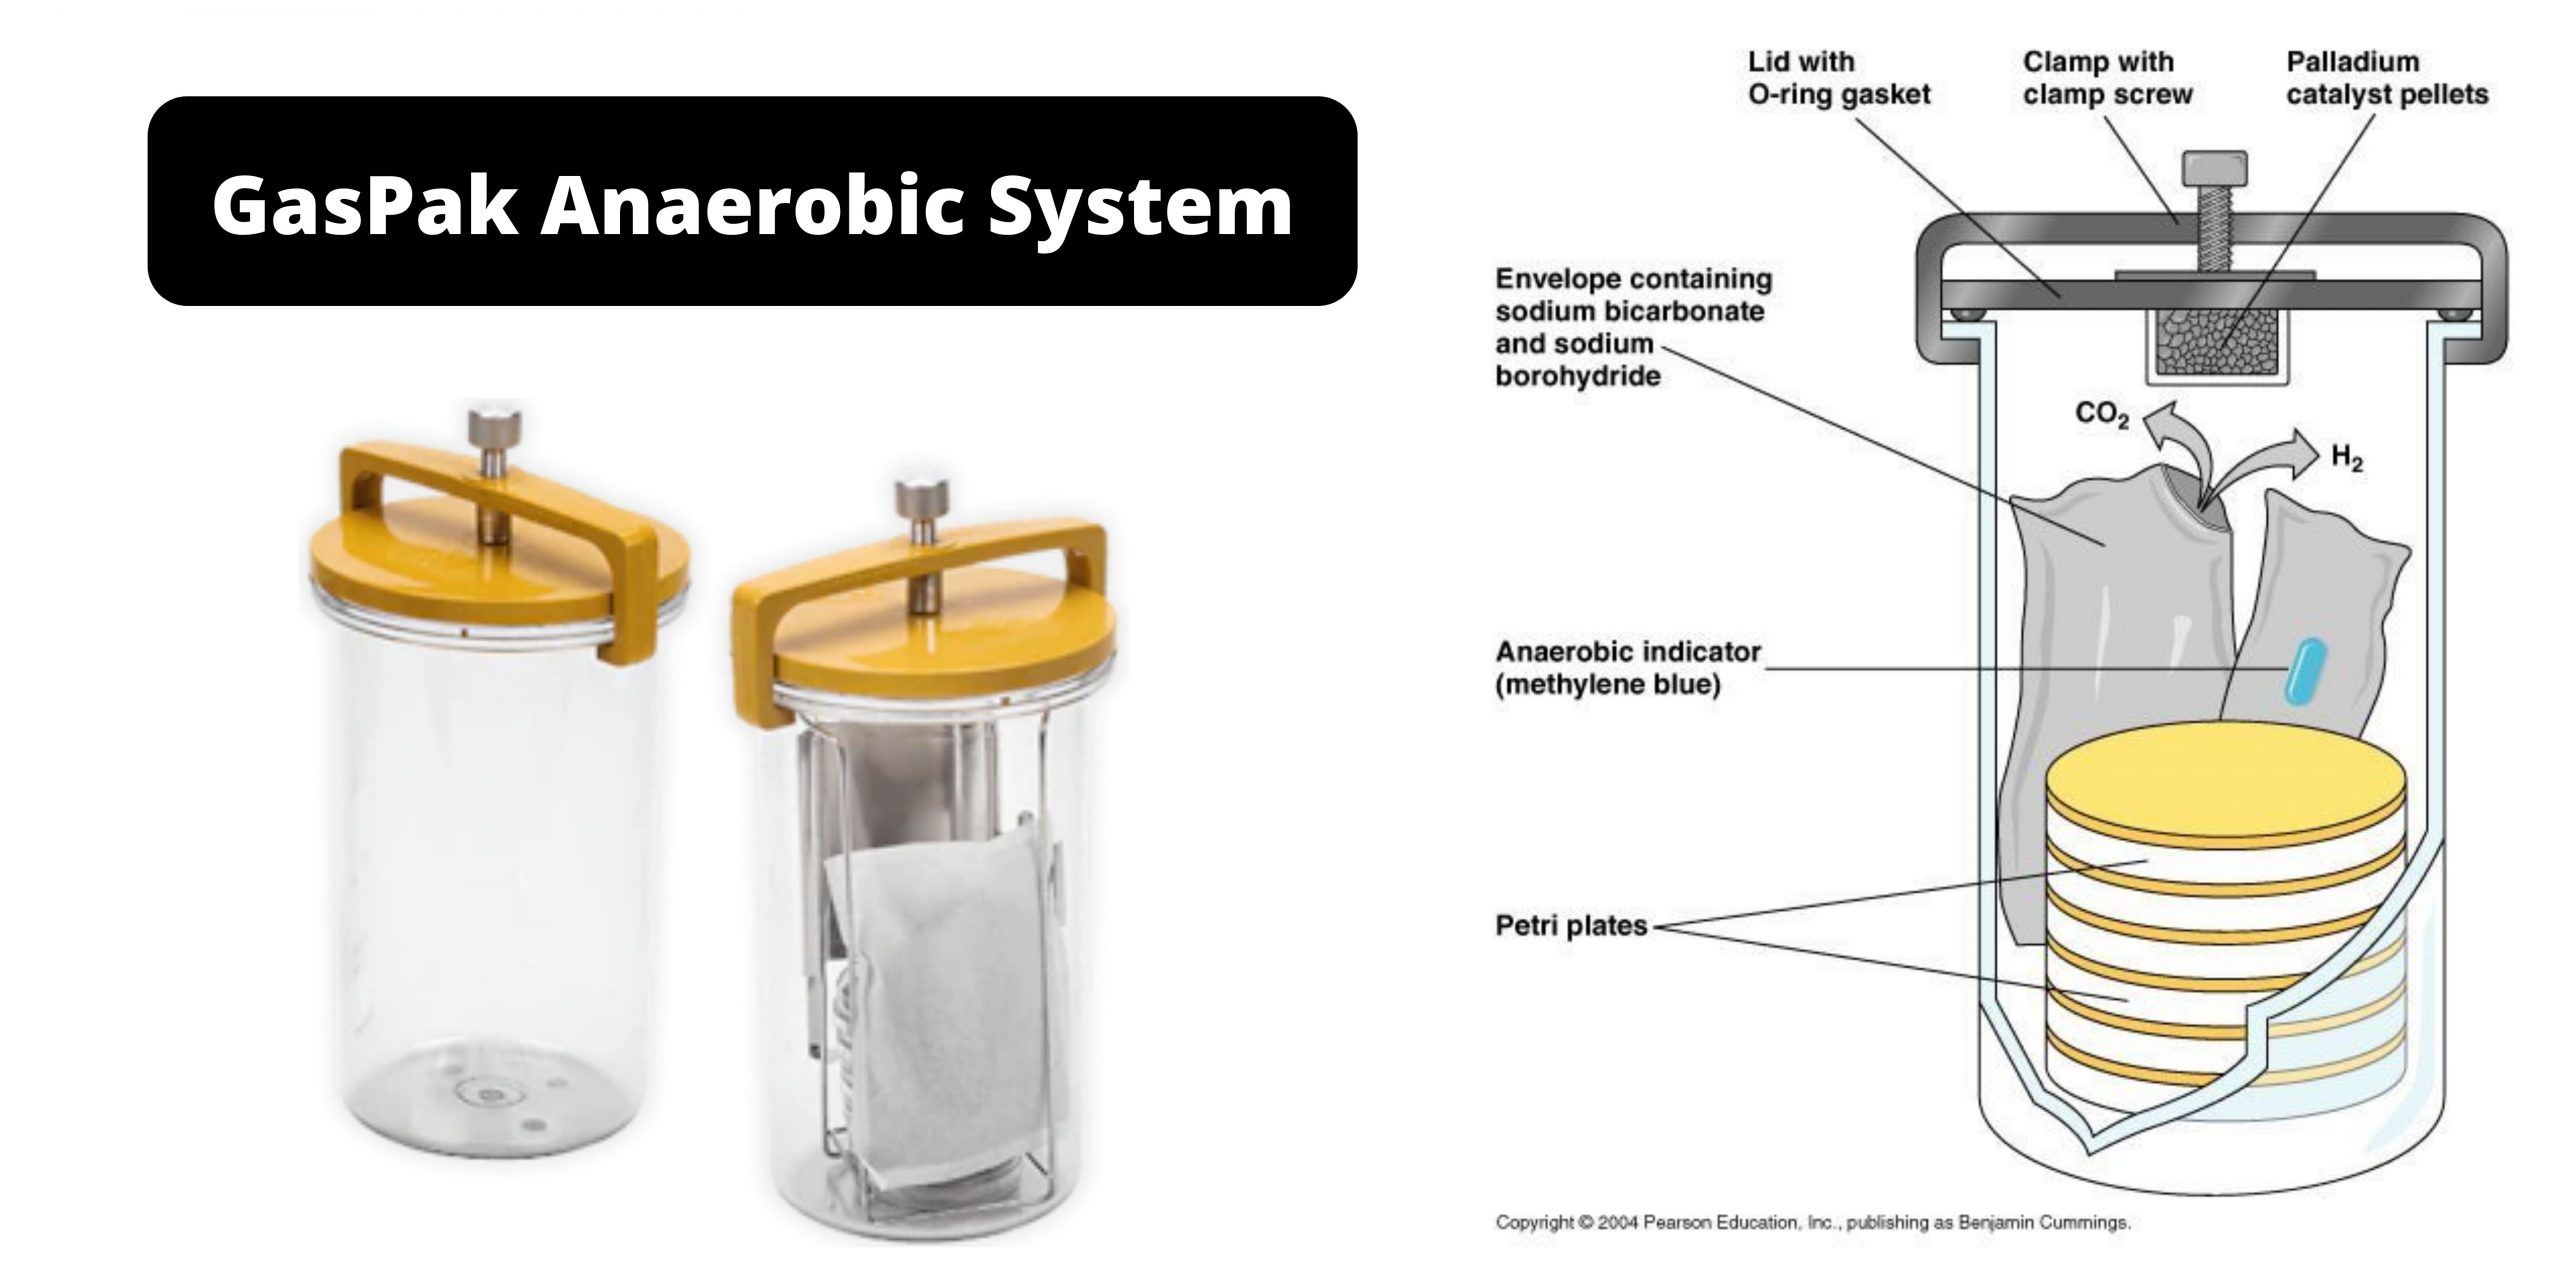 GasPak Anaerobic System Principle, Application